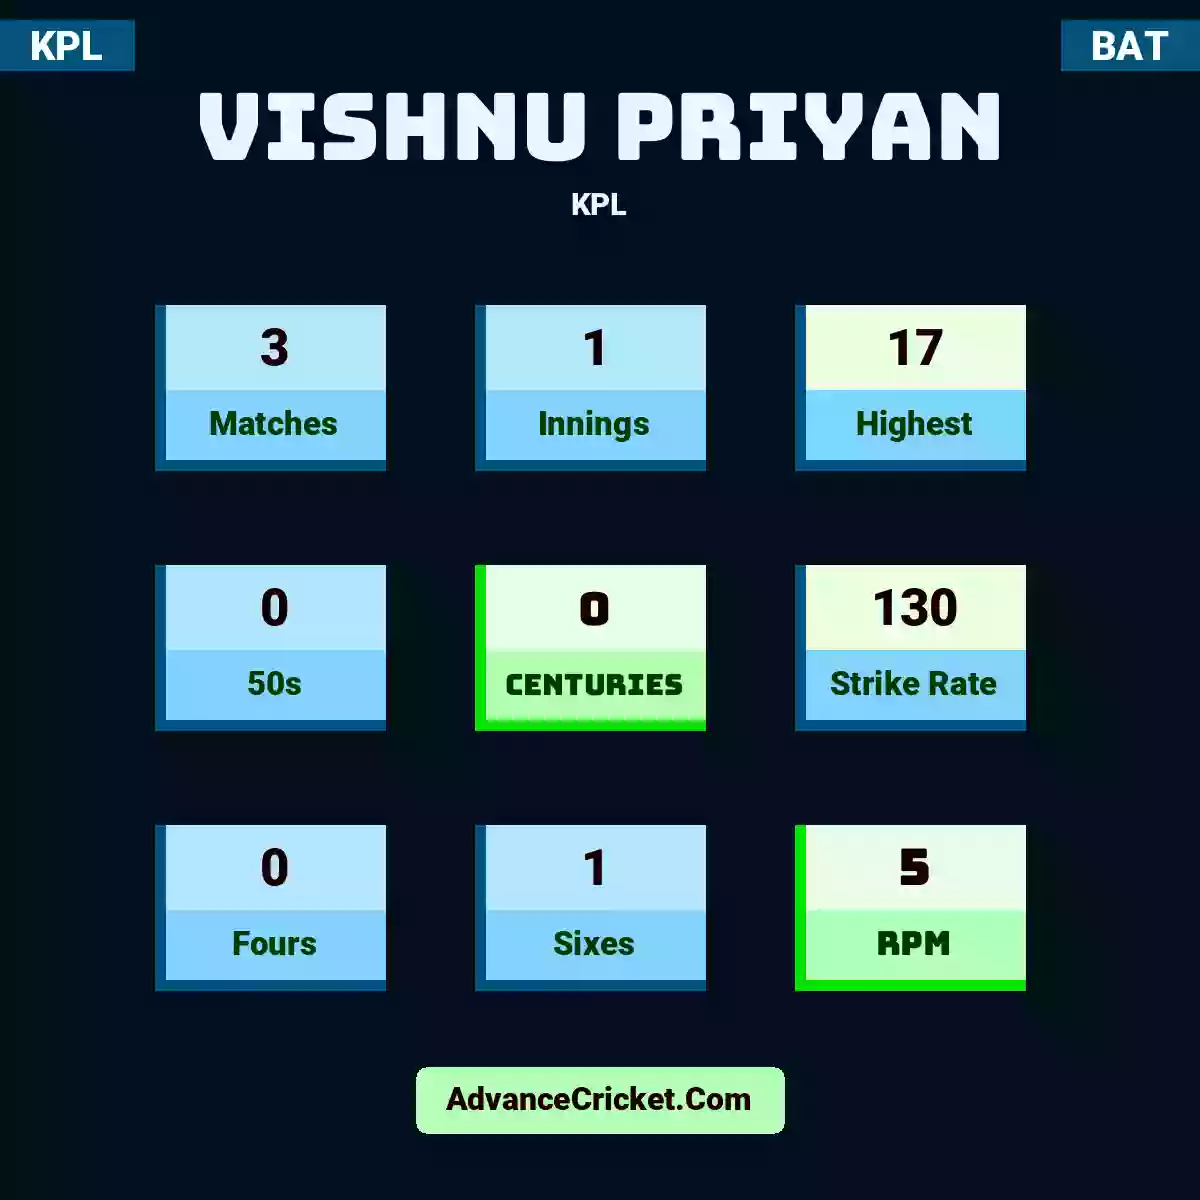 Vishnu Priyan KPL , Vishnu Priyan played 3 matches, scored 17 runs as highest, 0 half-centuries, and 0 centuries, with a strike rate of 130. V.Priyan hit 0 fours and 1 sixes, with an RPM of 5.